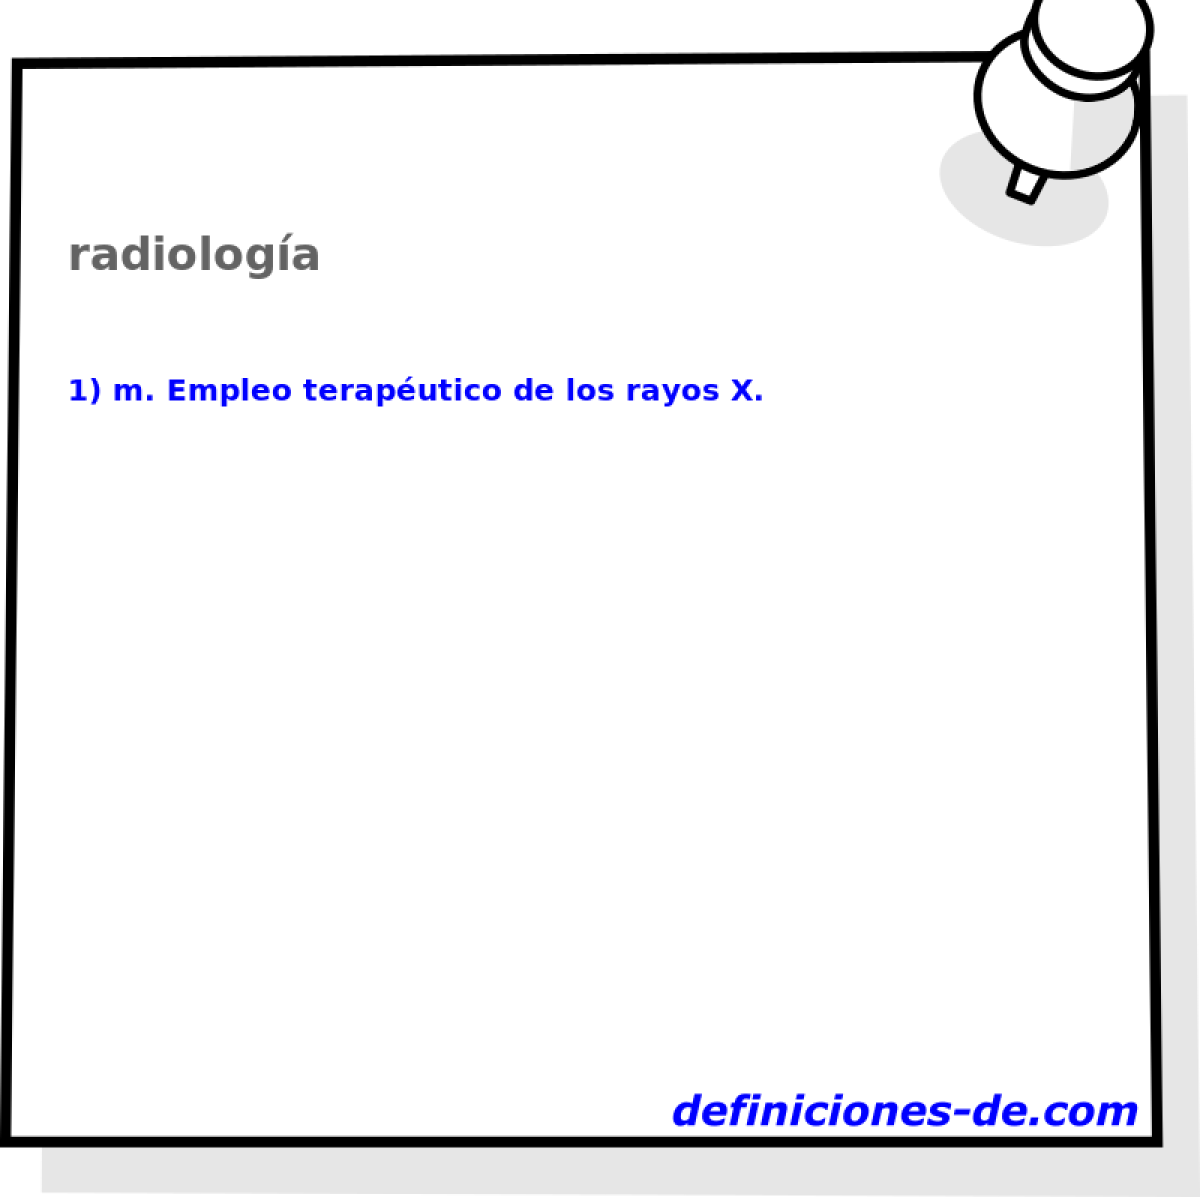 radiologa 